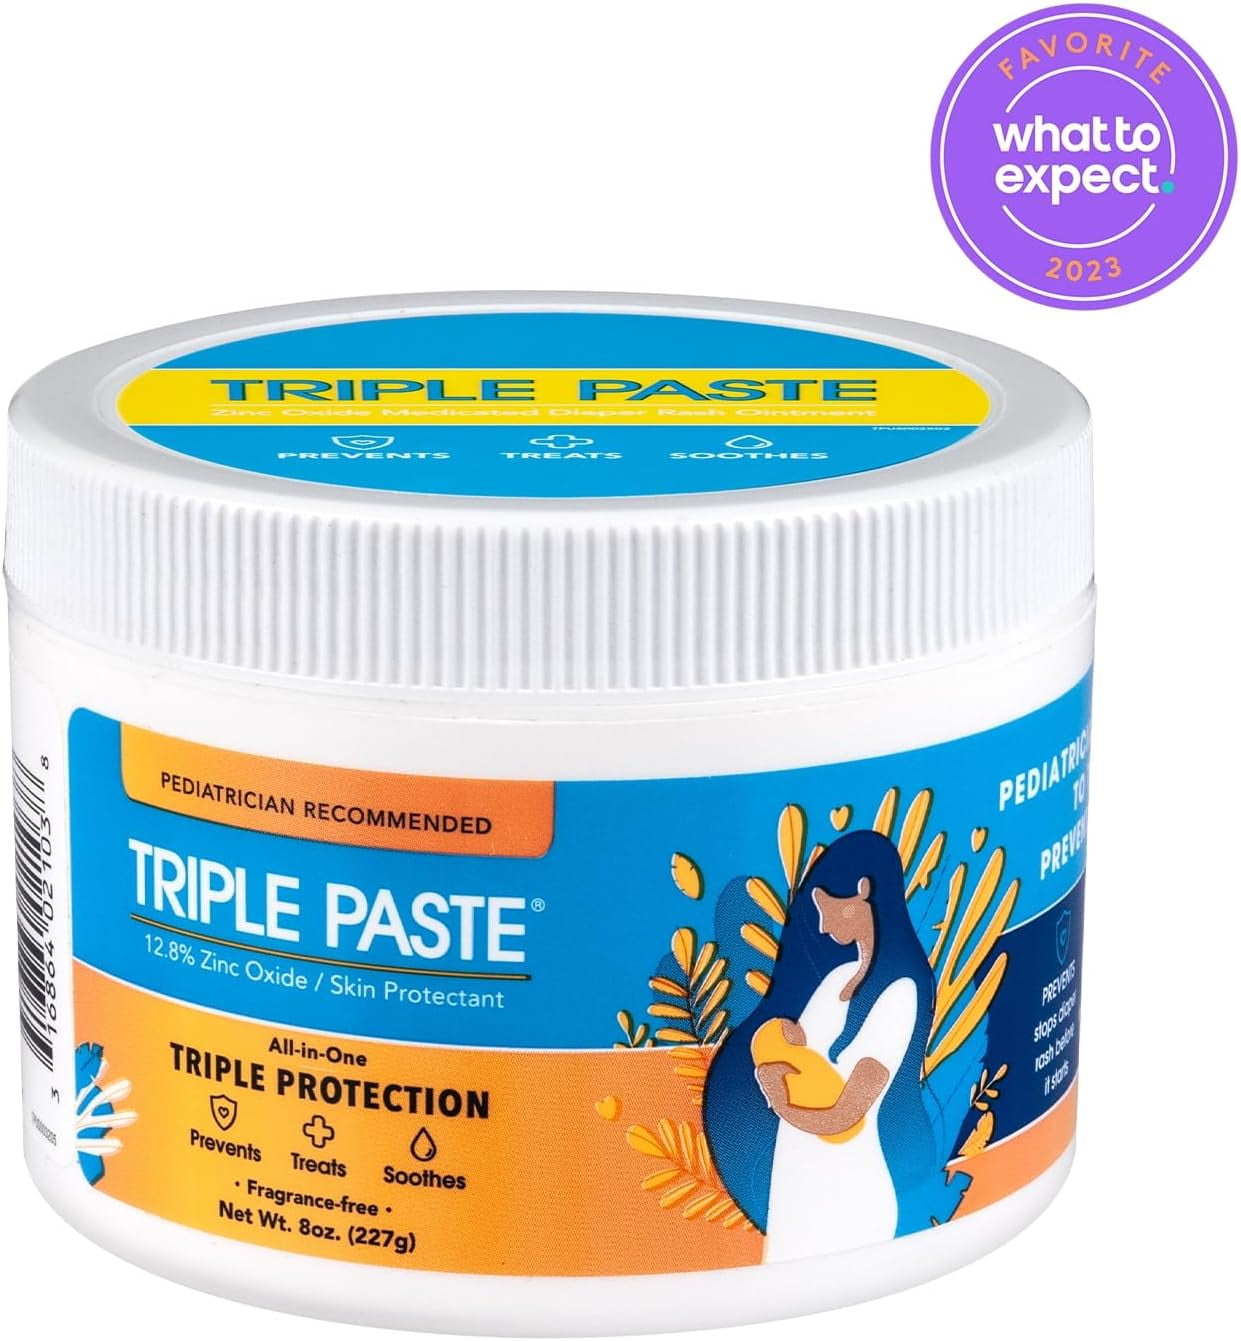 Dropship Triple Paste Diaper Rash Cream, Hypoallergenic Medicated